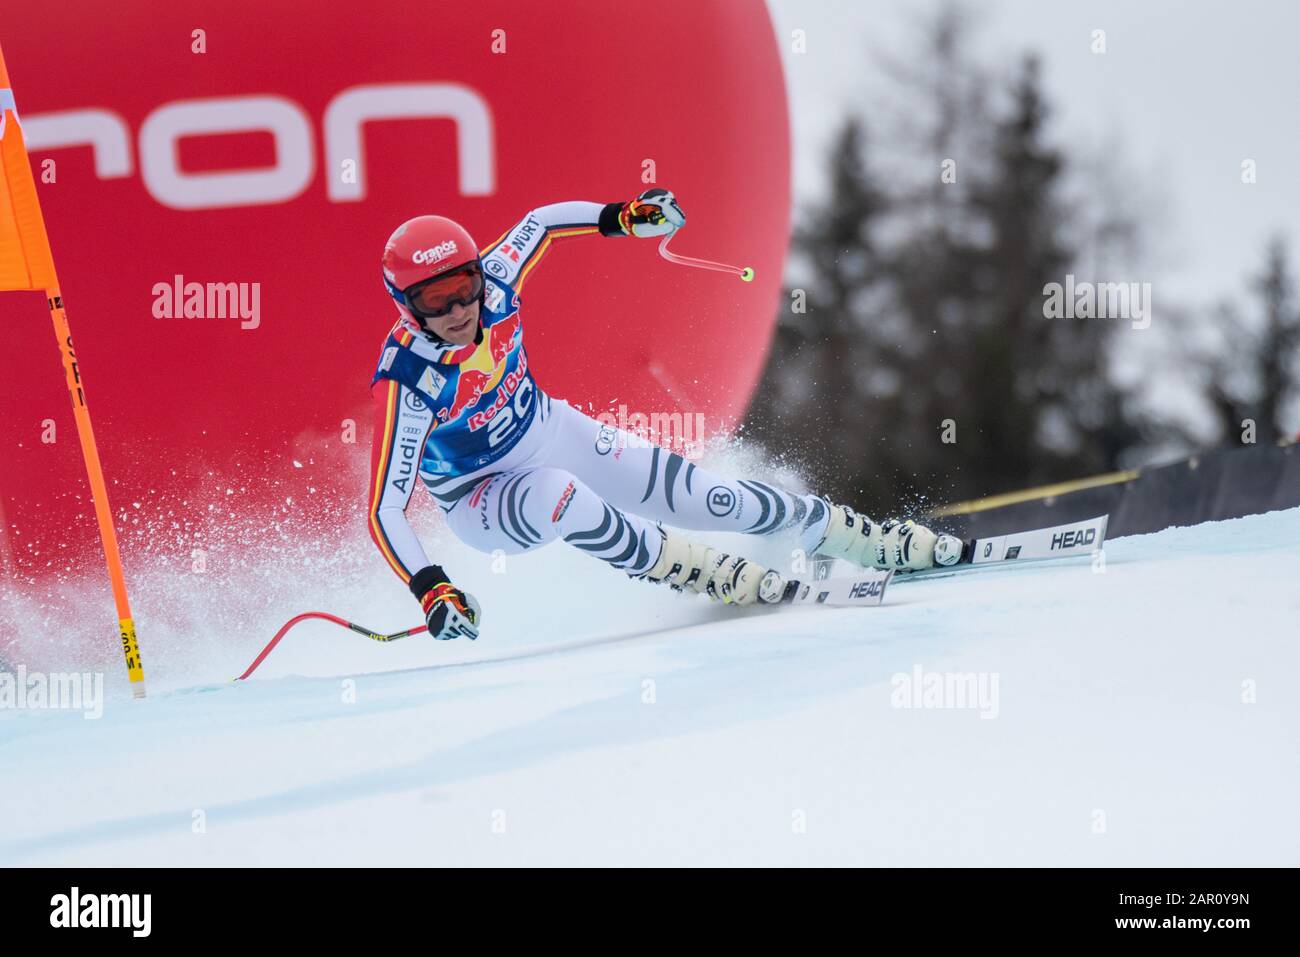 Josef Ferstl of Germany at the Ski Alpin: 80. Hahnenkamm Race 2020 - Audi FIS Alpine Ski World Cup - Men's Downhill at the Streif on January 25, 2020 in Kitzbuehel, AUSTRIA. Credit: European Sports Photographic Agency/Alamy Live News Stock Photo